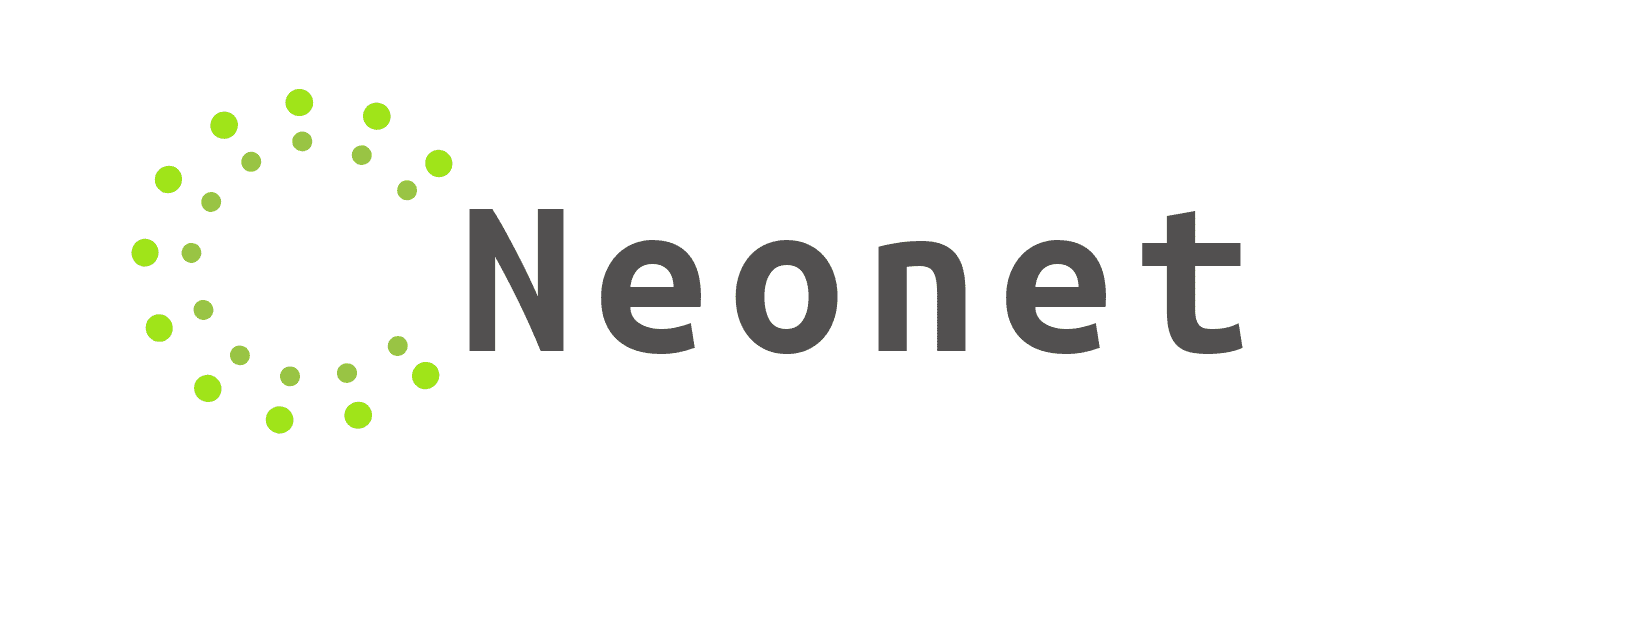 Neonet design